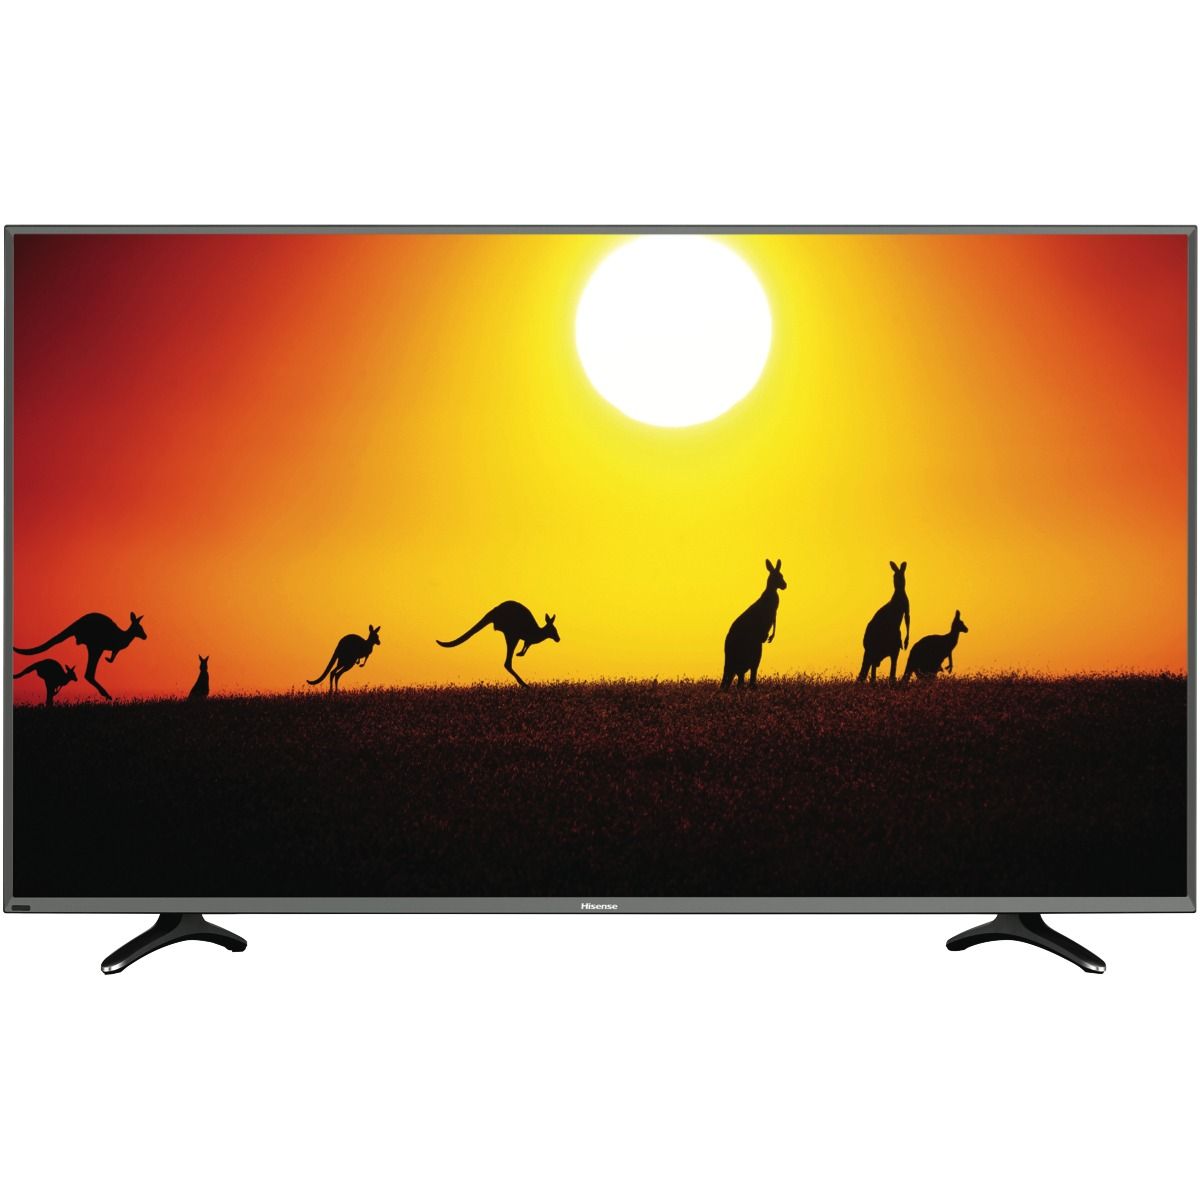 TV LCD 50″ (126cm) Hisense w/remote